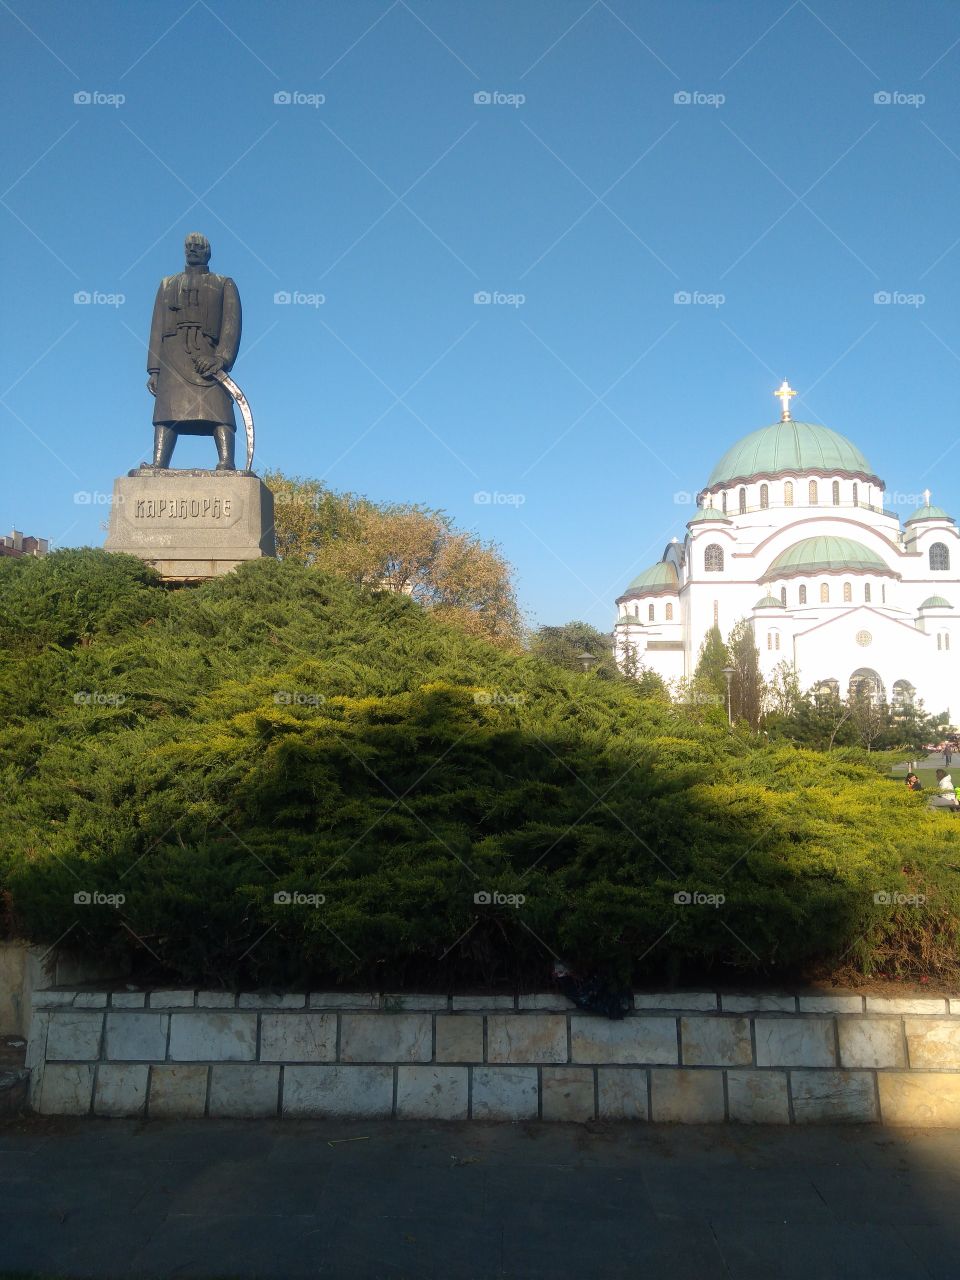 Monument to Karadjordje Belgrade (Serbia). Serbian hero